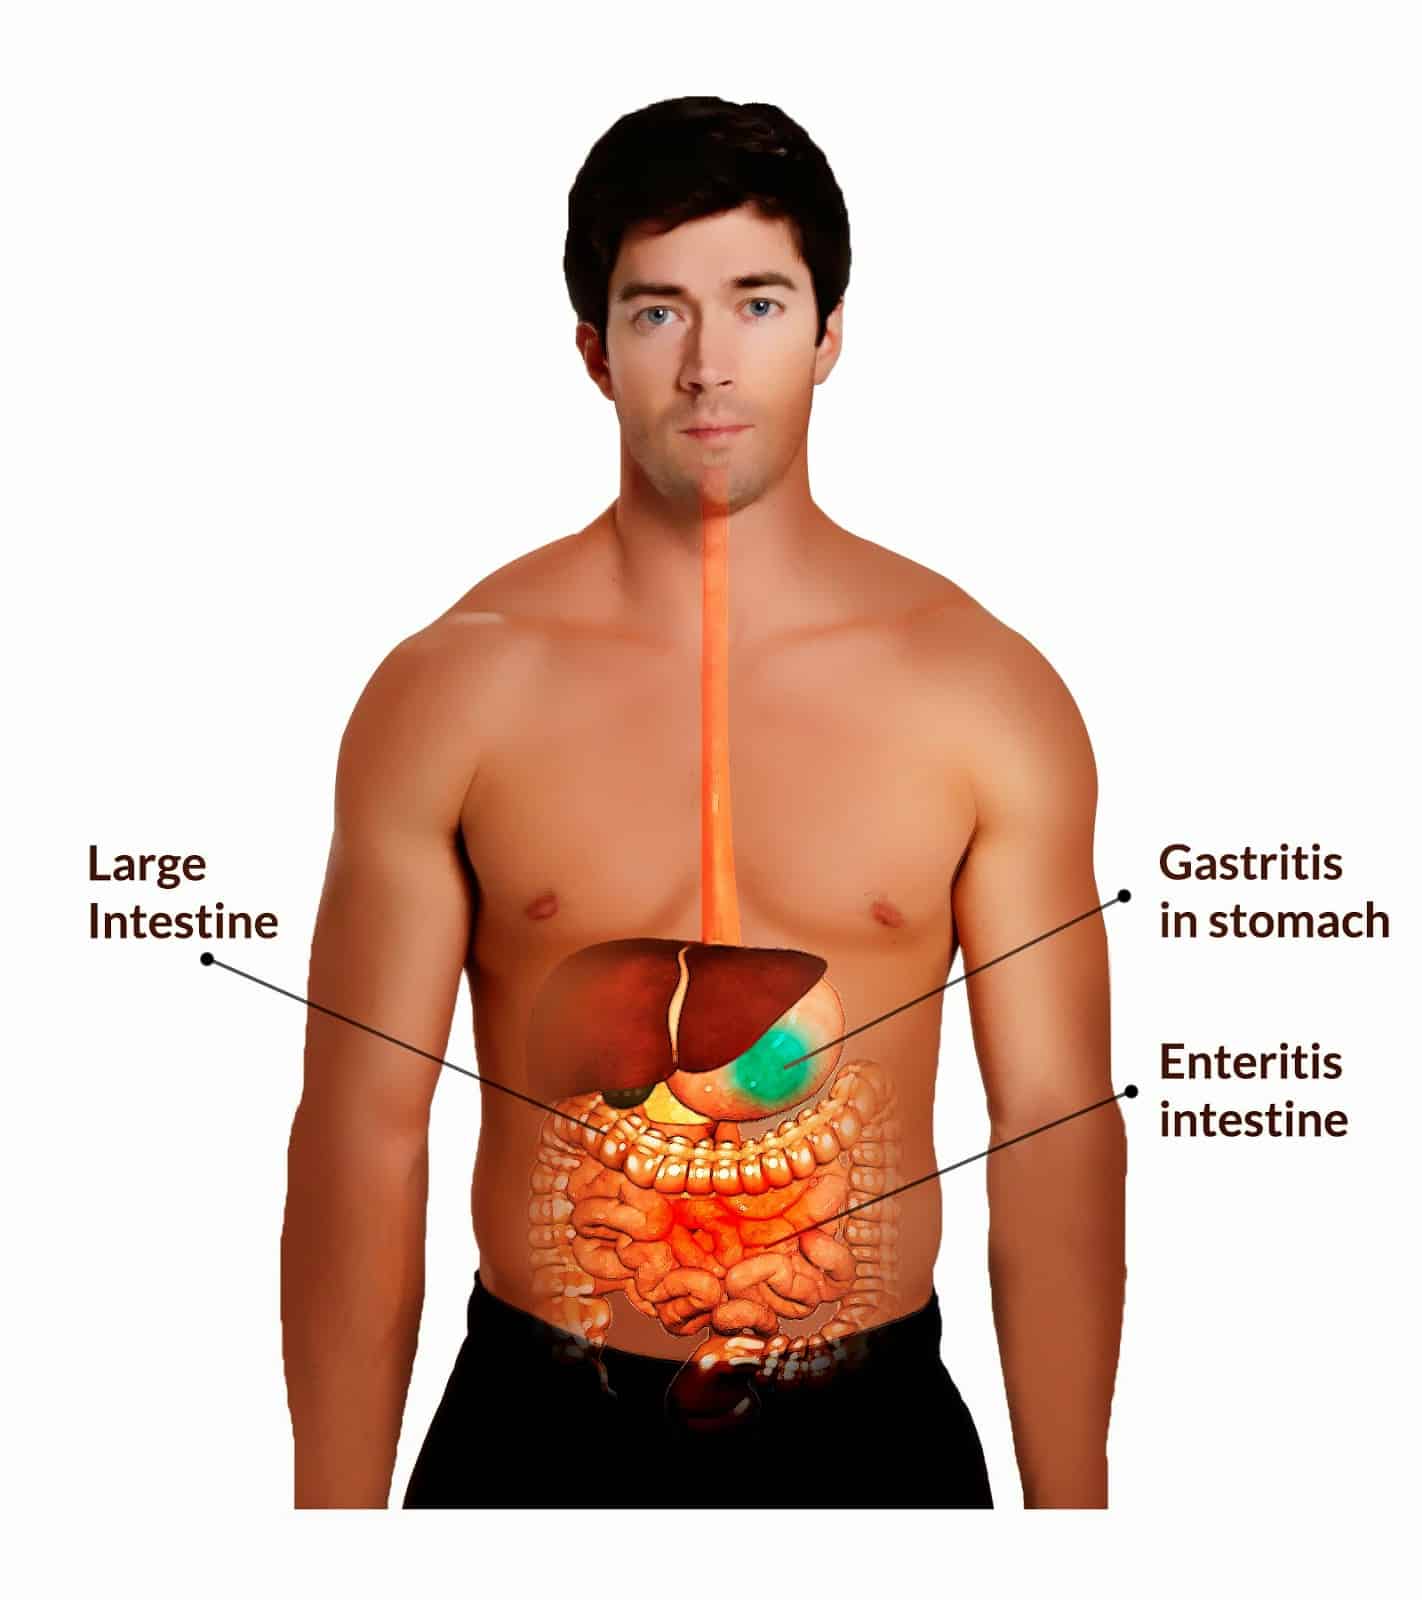 Dr Sherazi: Gastroenteritis